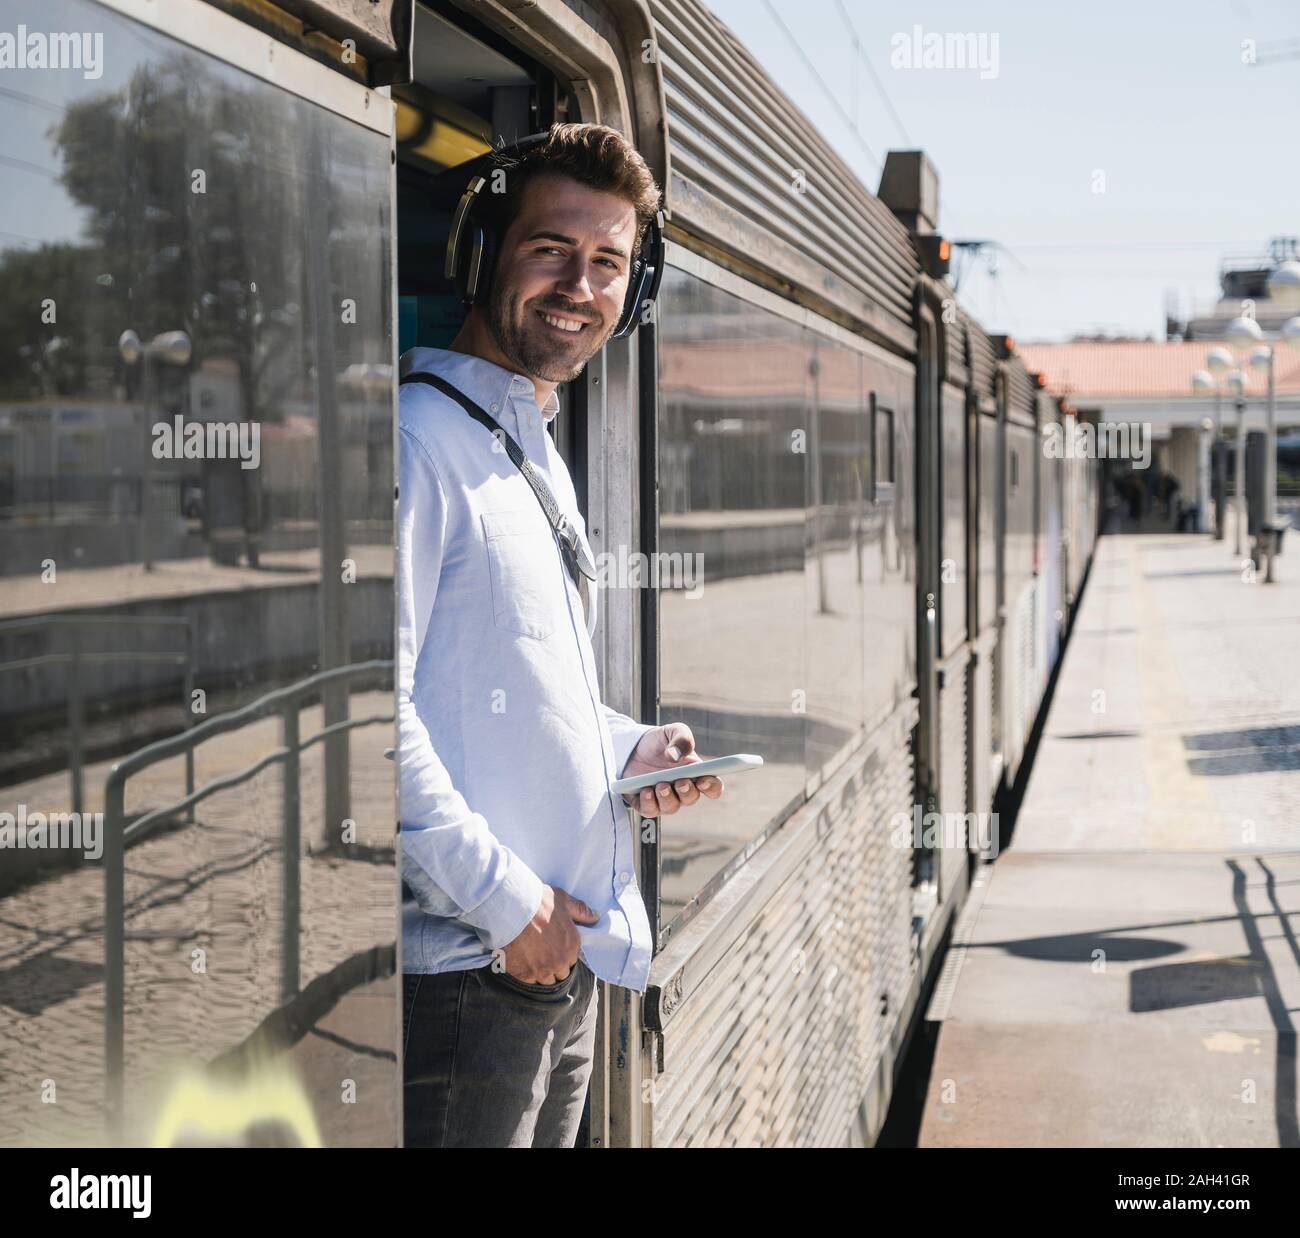 Smiling young man with headphones and smartphone standing in train door Stock Photo